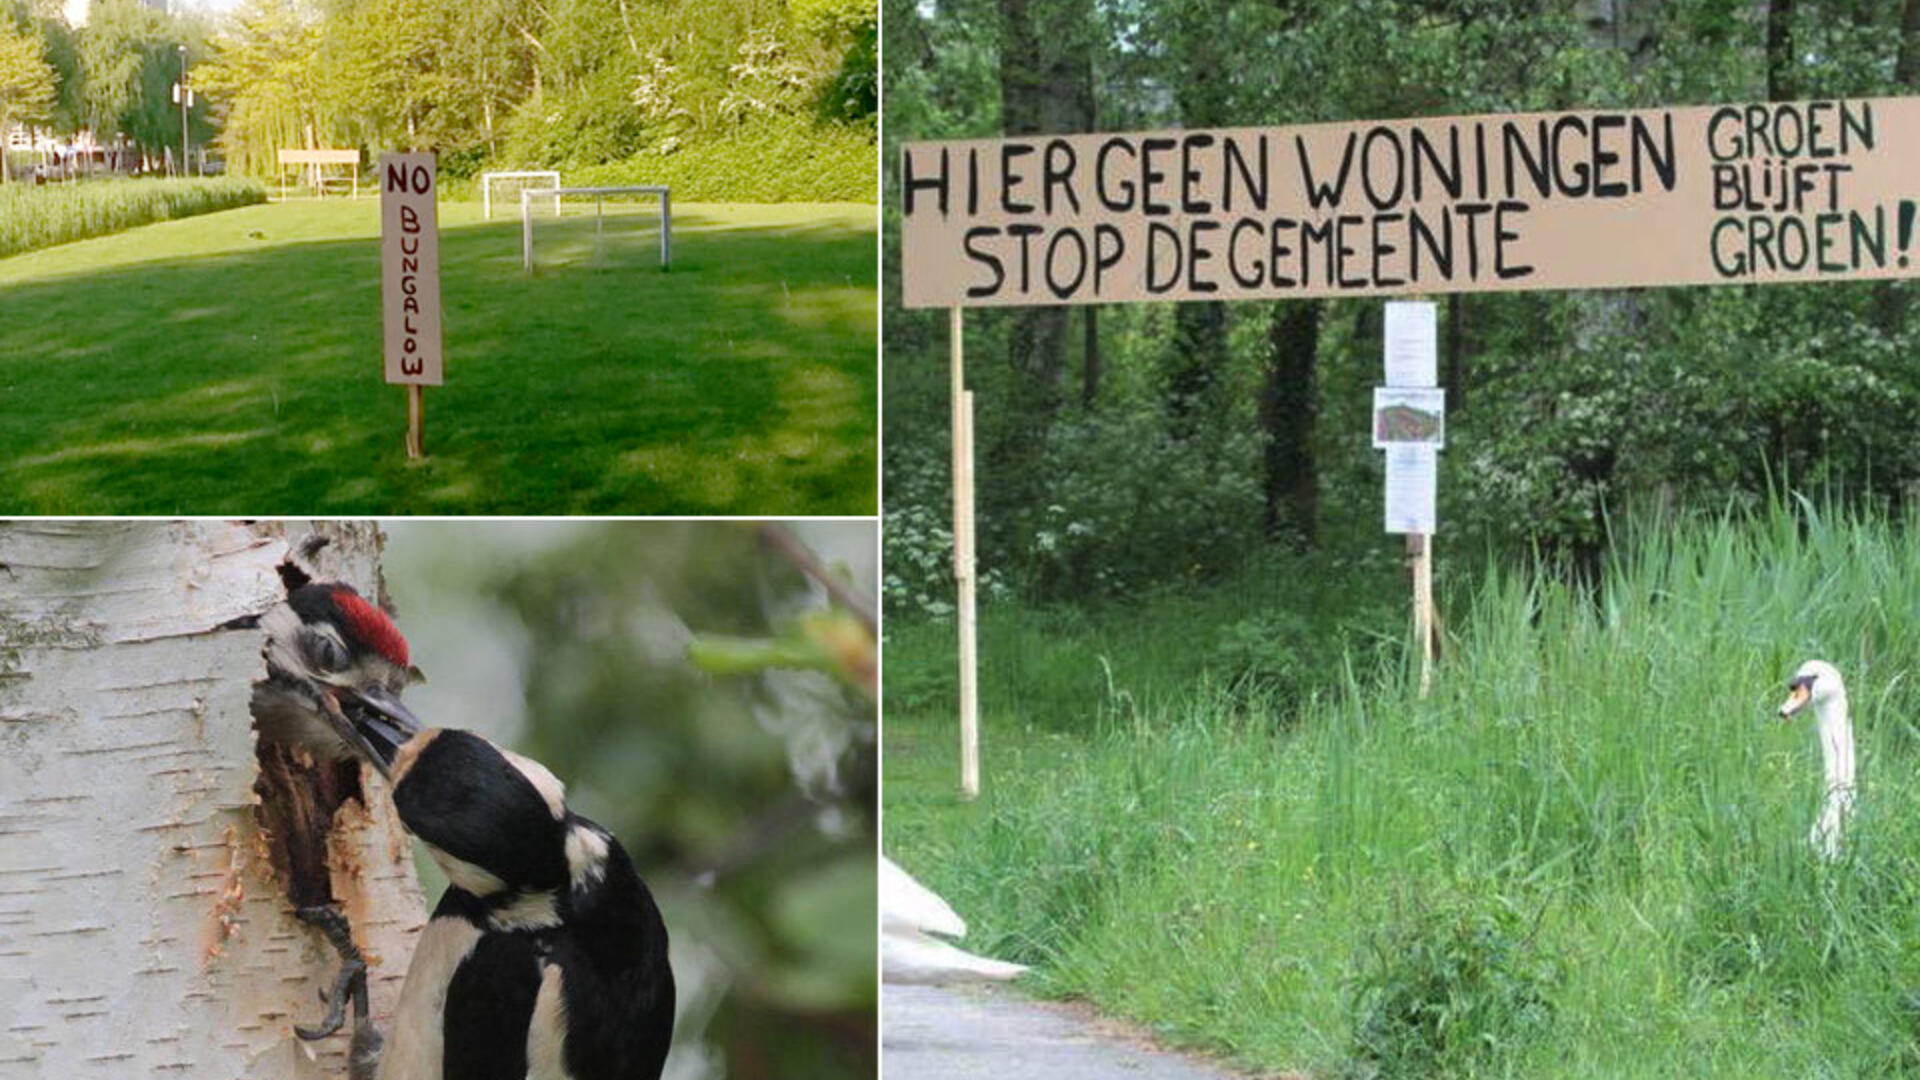 GroenLinks verbijsterd over plan bouw bungalows in groene zone Holy Noord - mei 2017